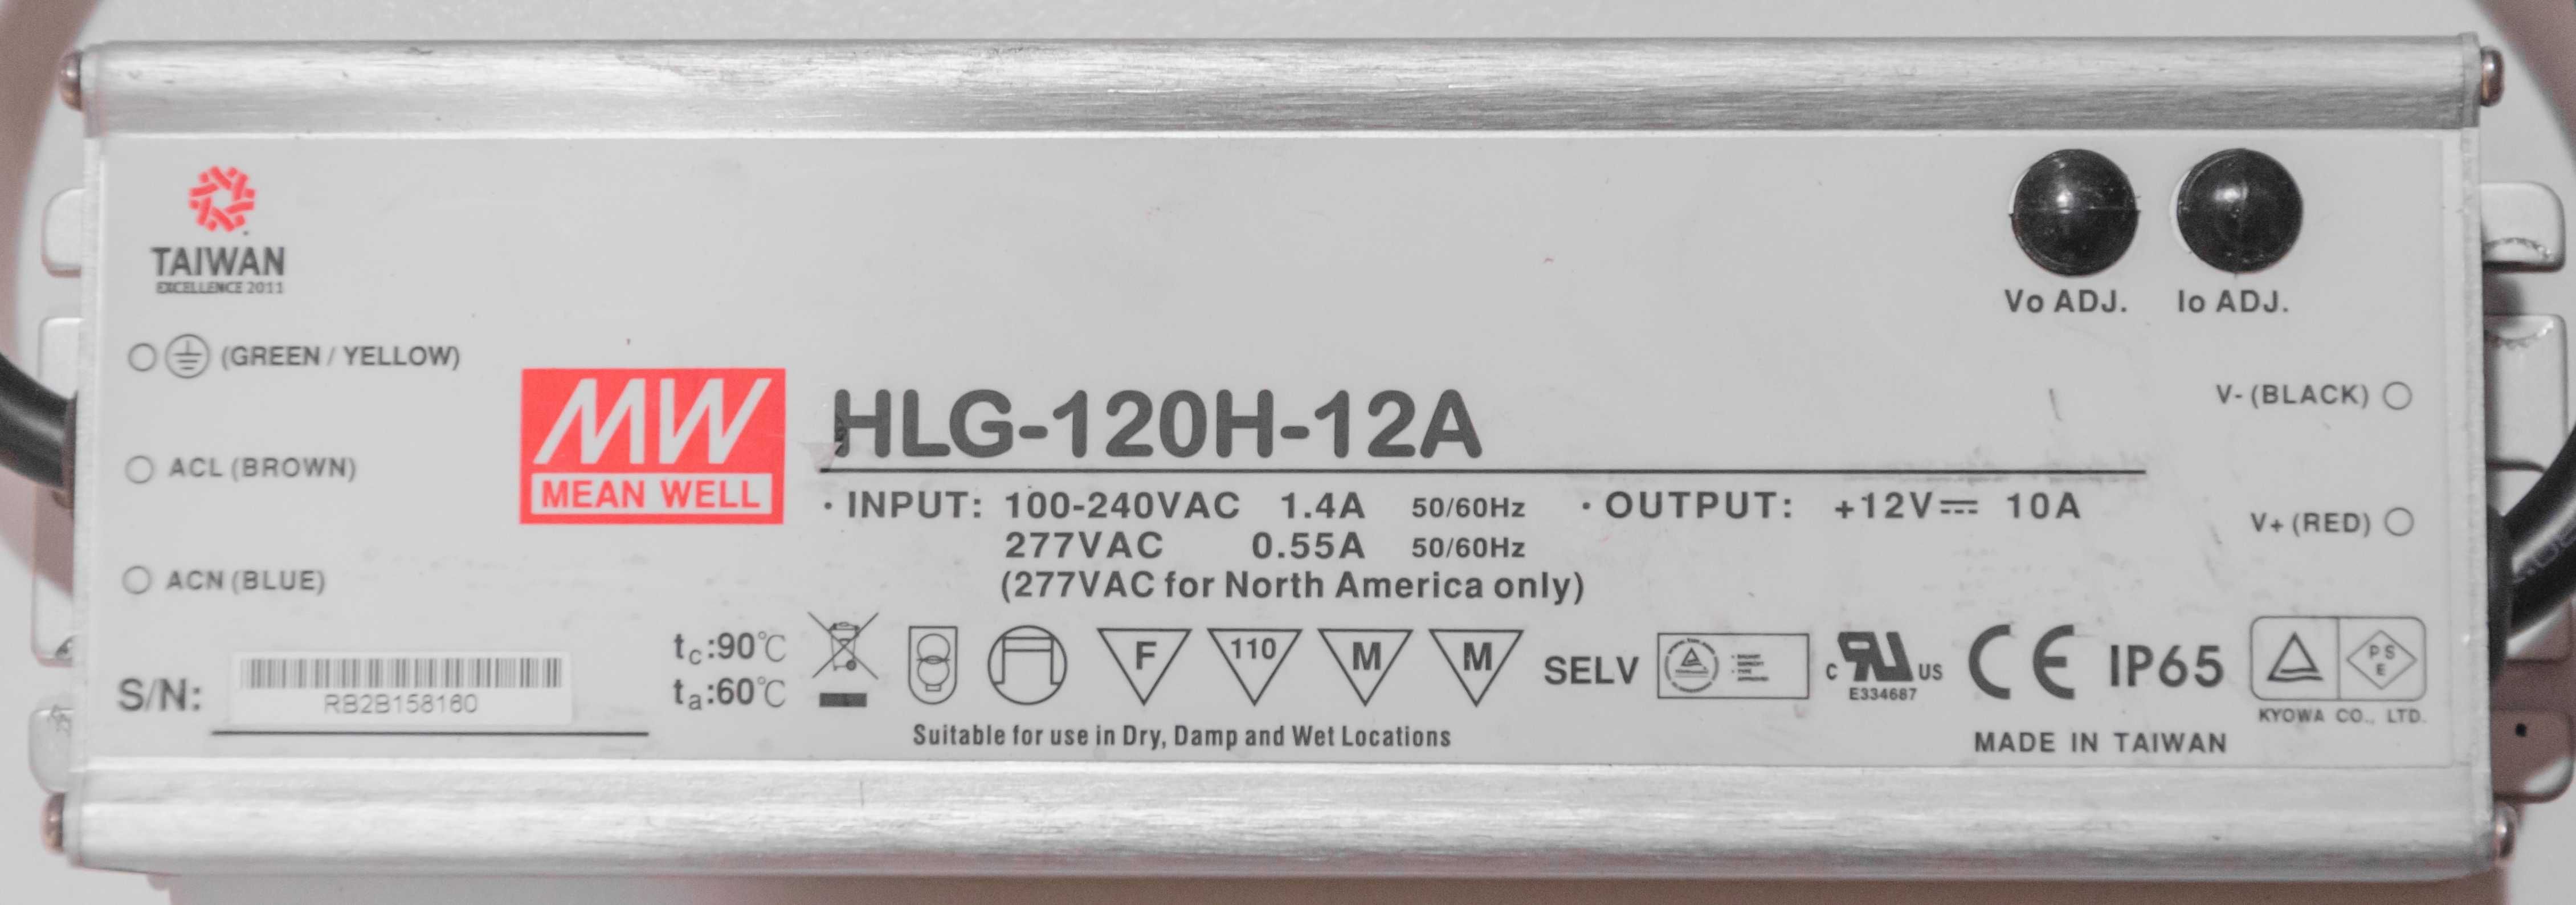 Sterownik Transformator Zasilacz LED Mean Well HLG-120H-12A